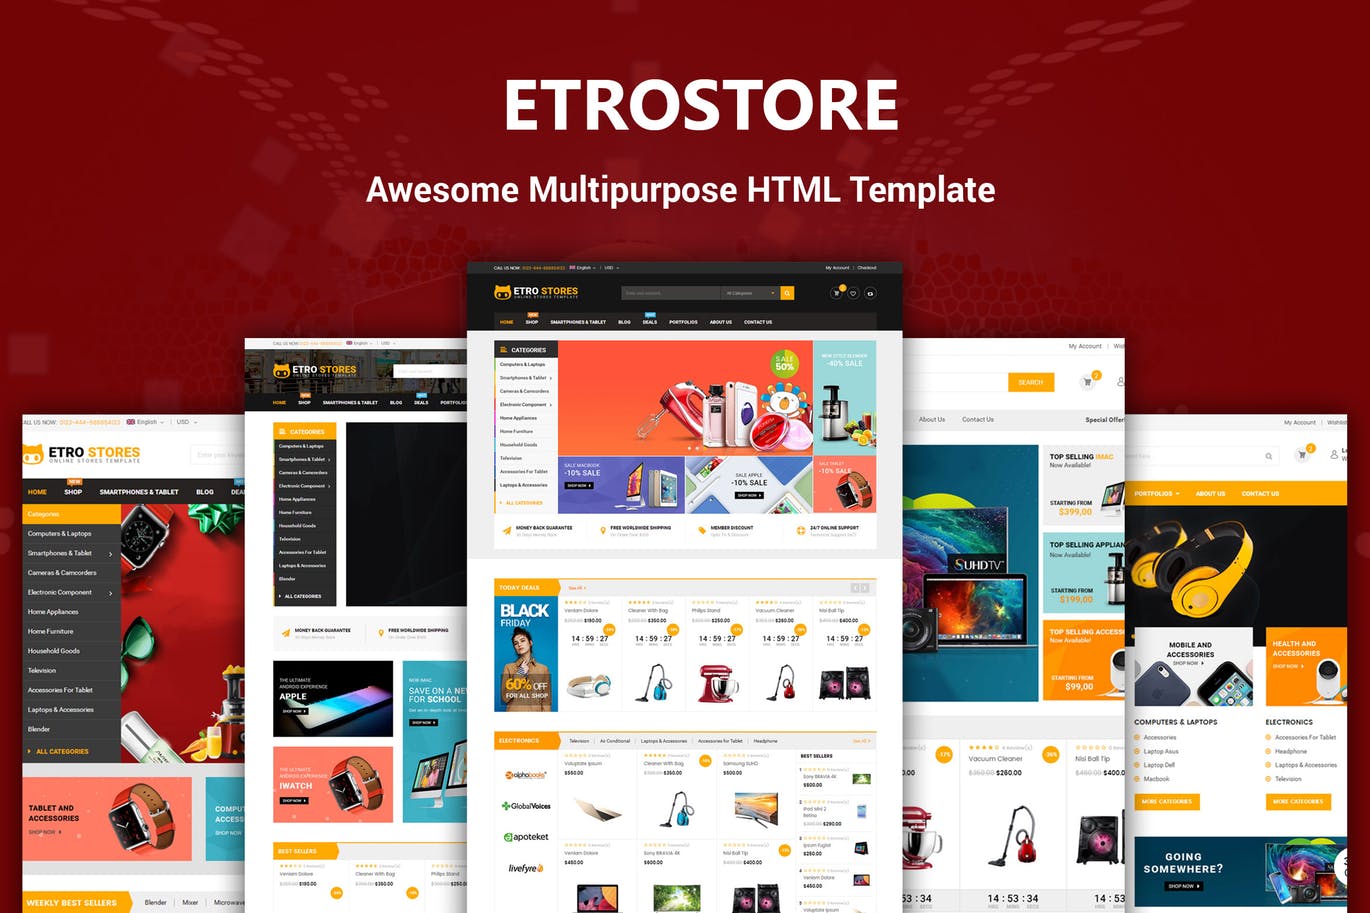 Bootstrap架构响应式多用途网上商城HTML5模板非凡图库精选 EtroStore – Responsive Multi-Purpose HTML Template插图